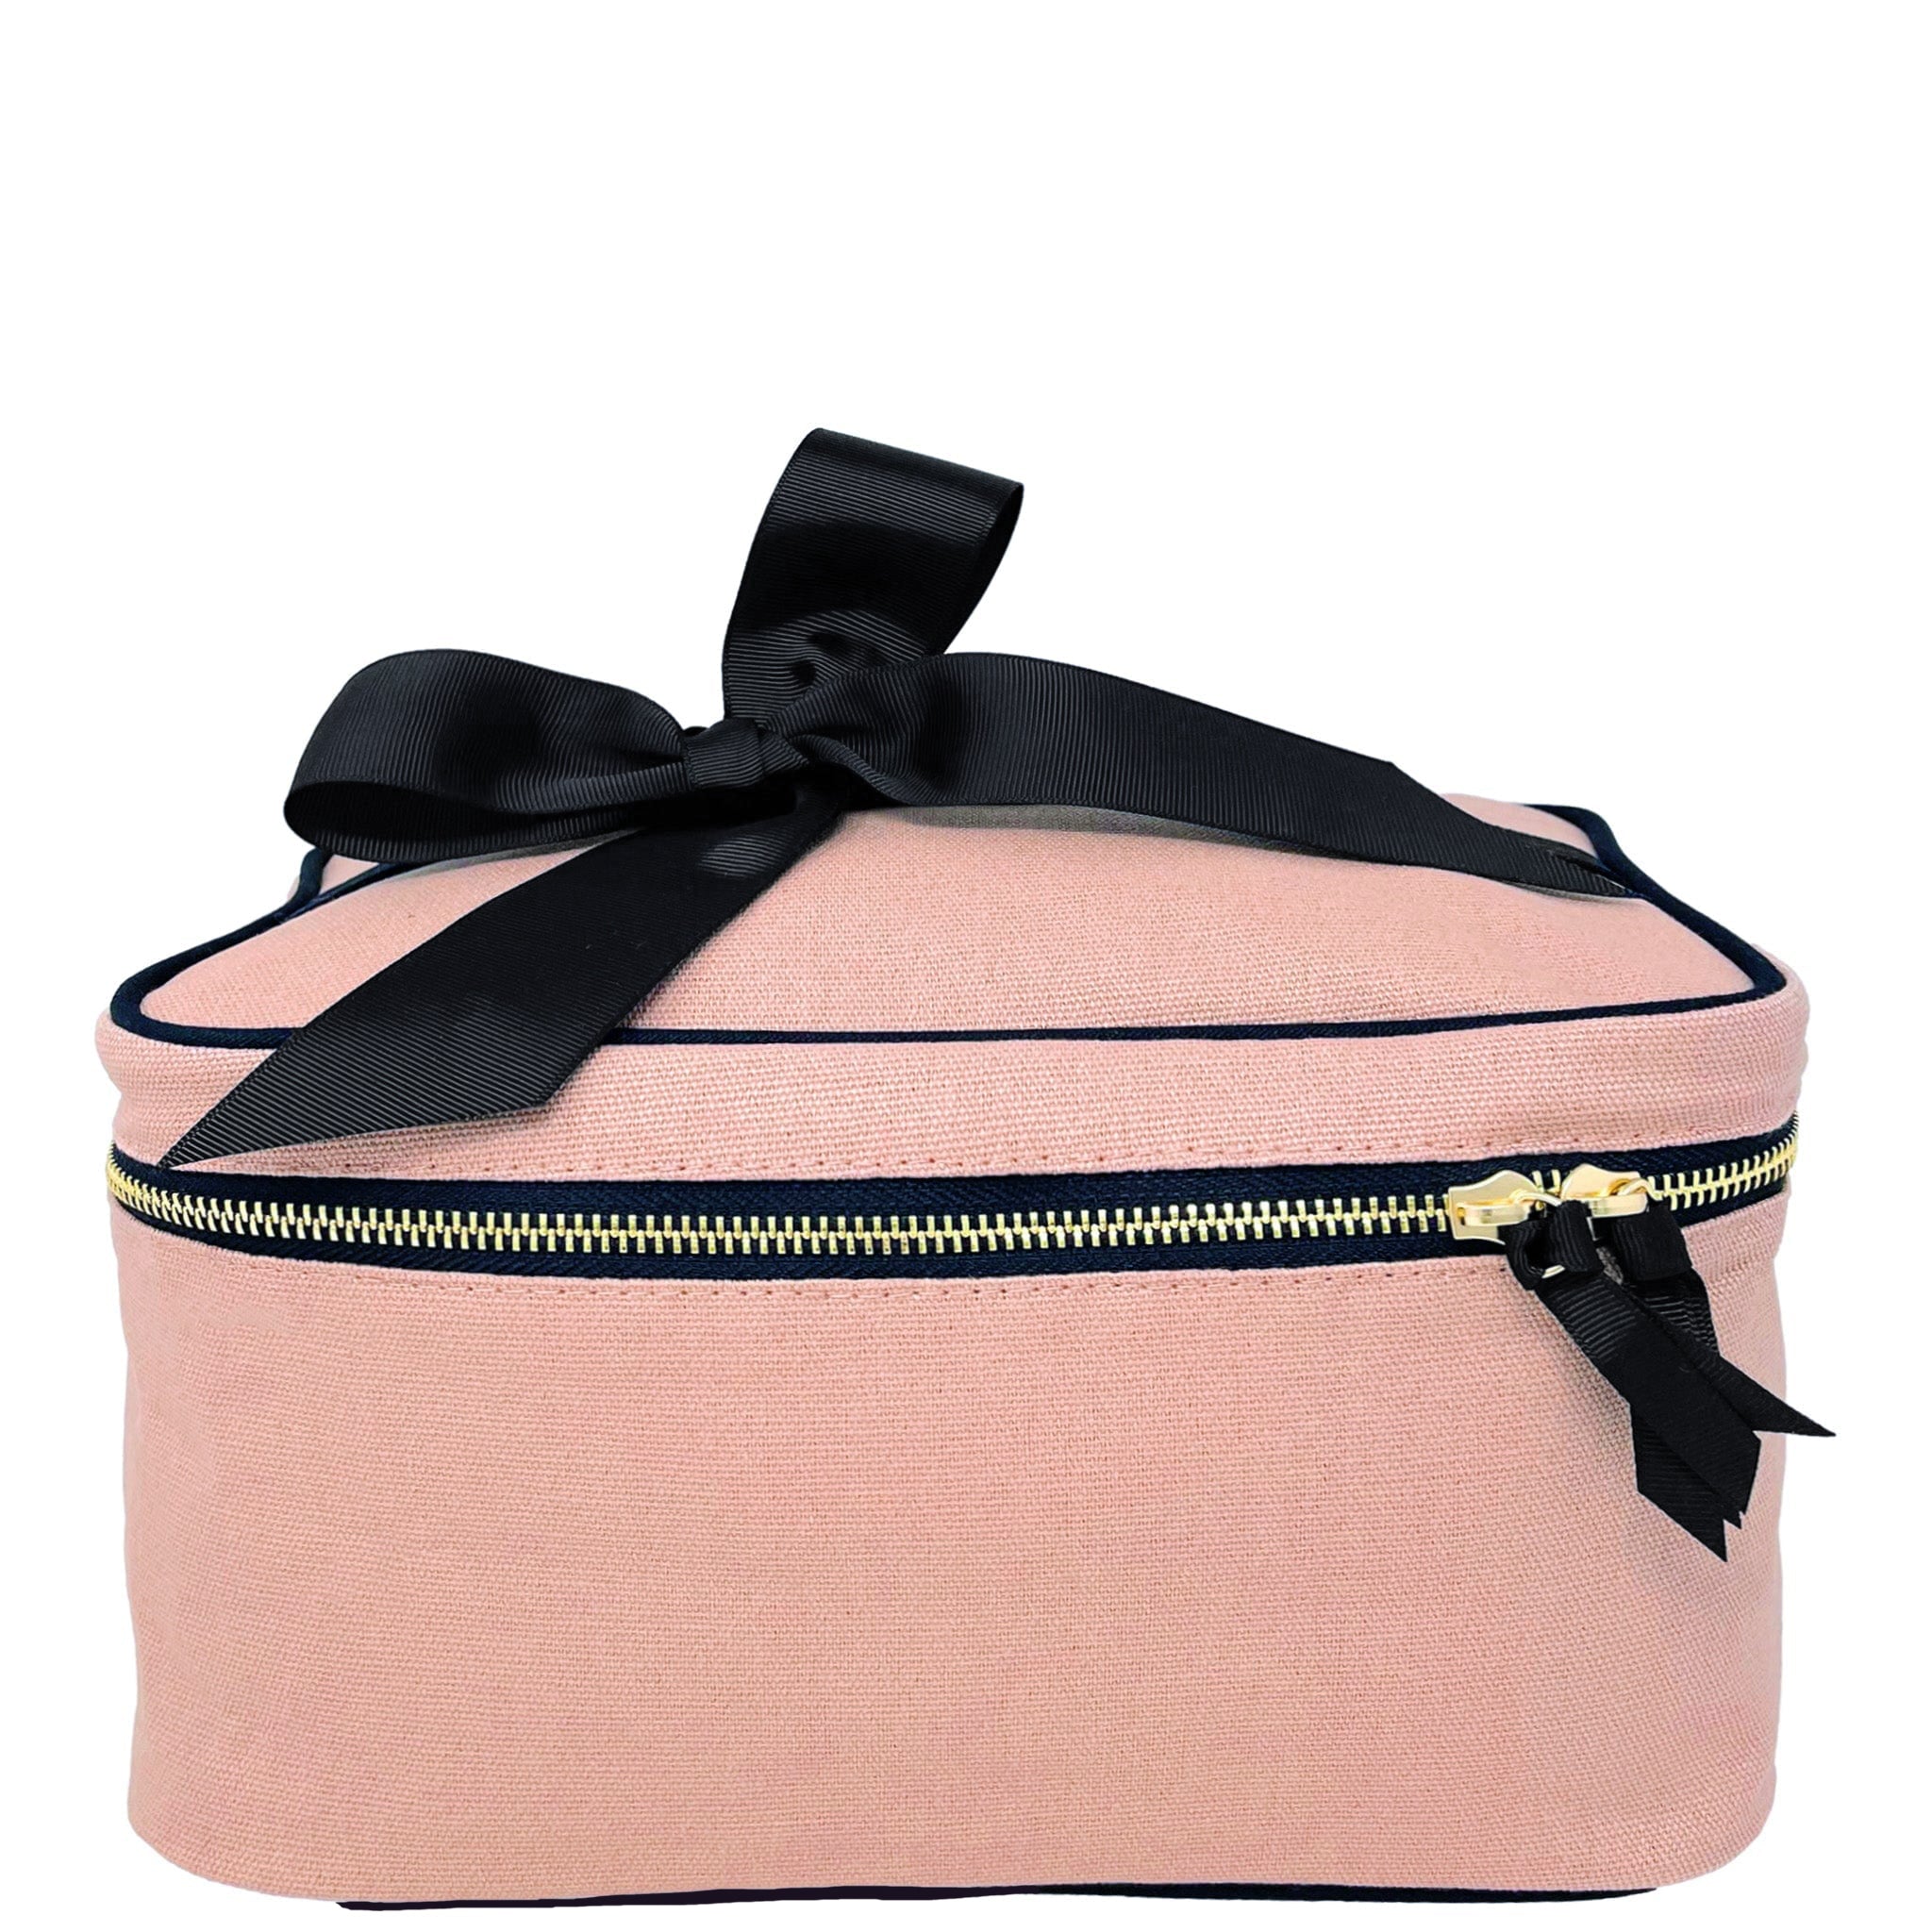 Case for Travel/Home/Makeup organizing - Customizable, Laminated Lining, Medium size, Pink Blush | Bag-all